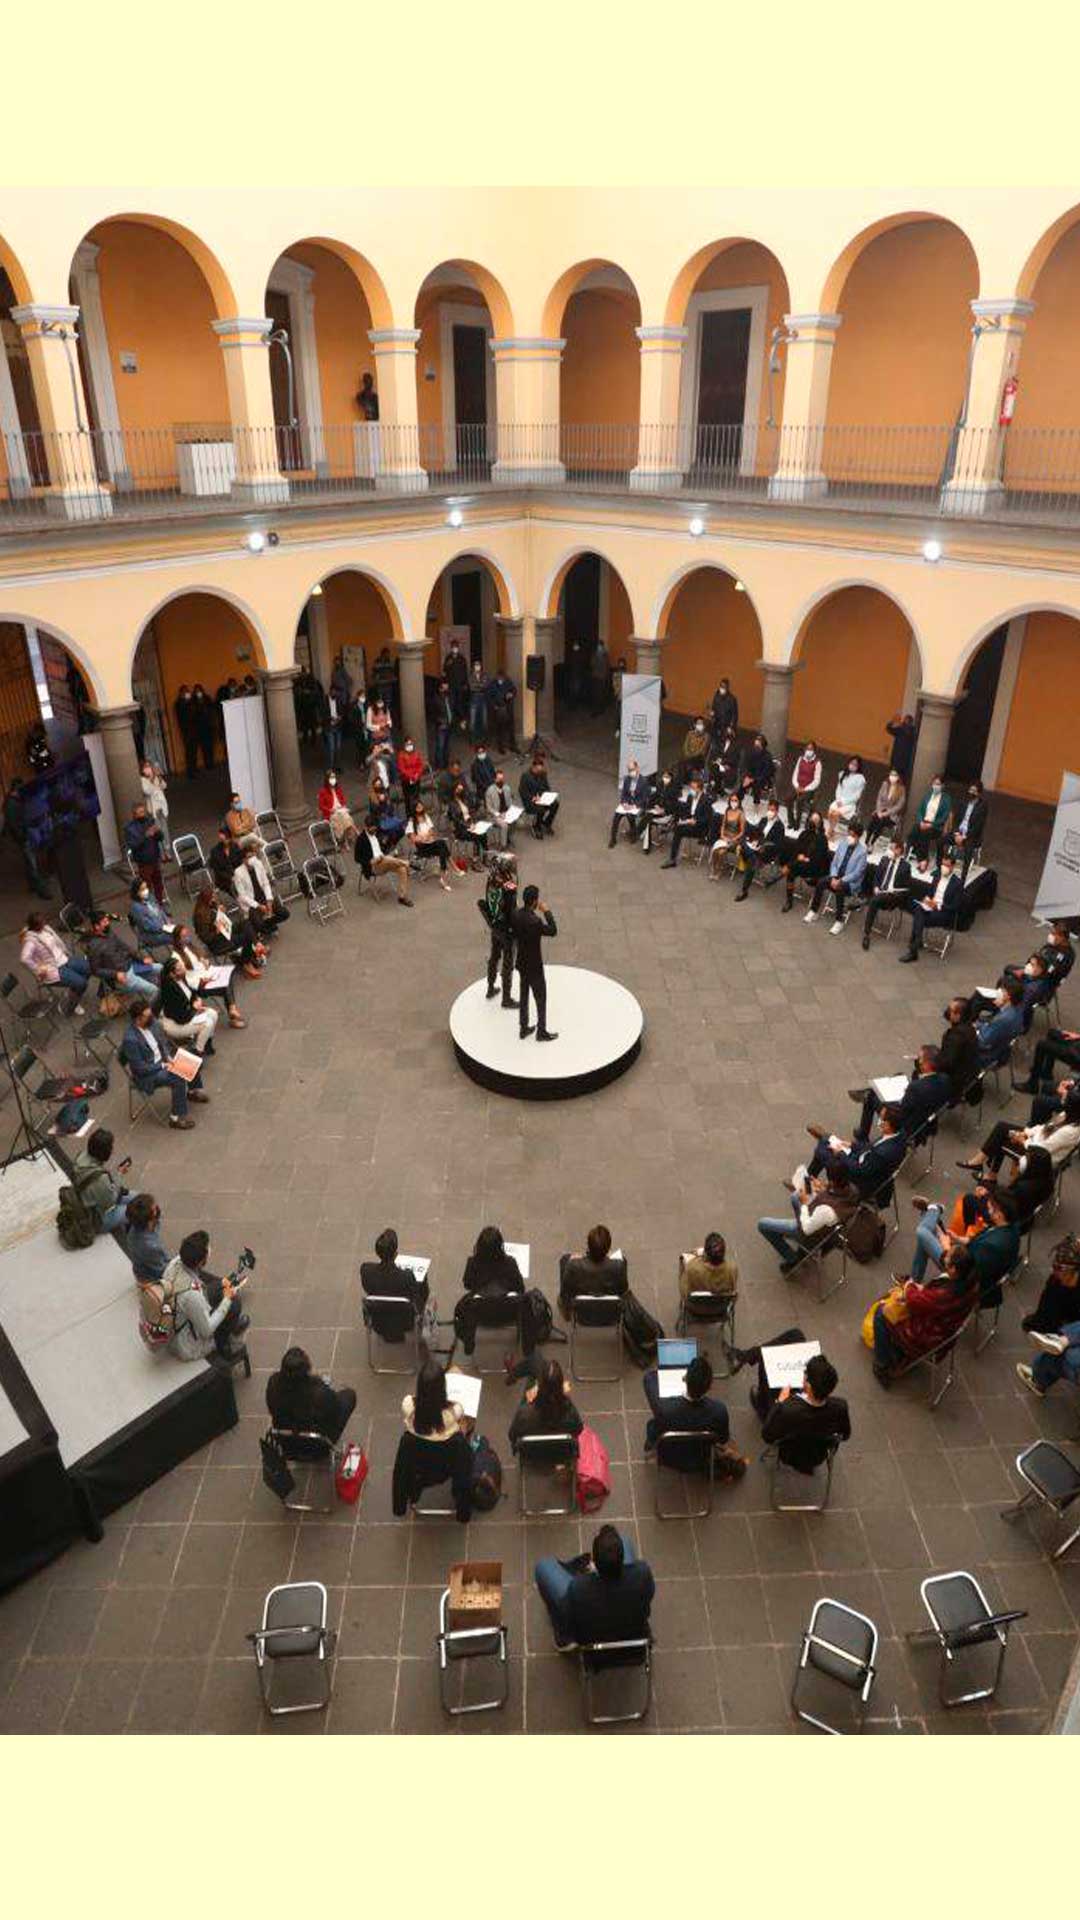 Instituto Municipal de la Juventud realiza encuentro de startups juveniles